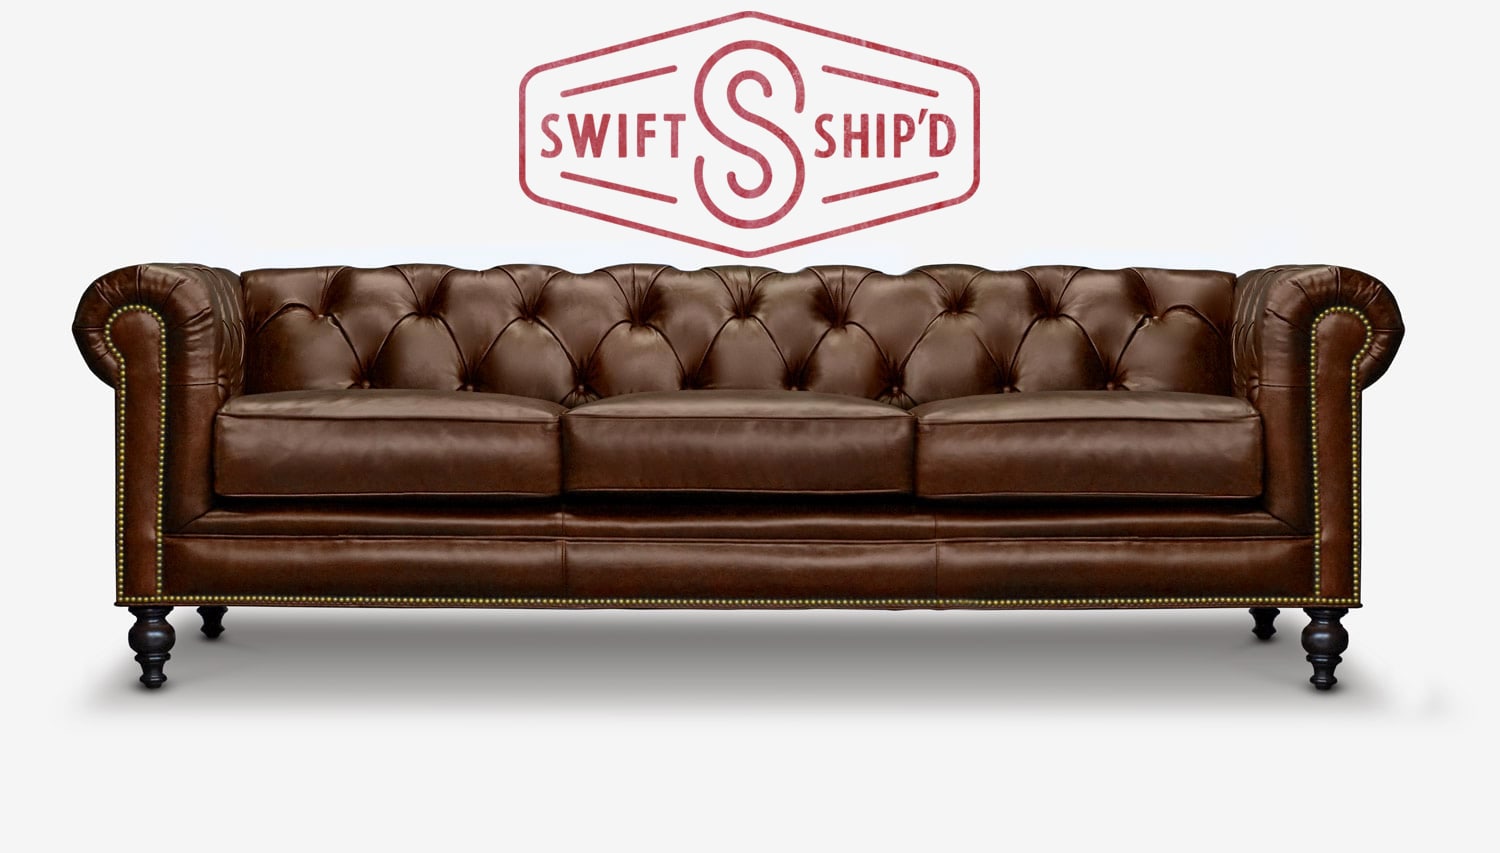 Swift-Ship’d Fitzgerald Chesterfield Sofa